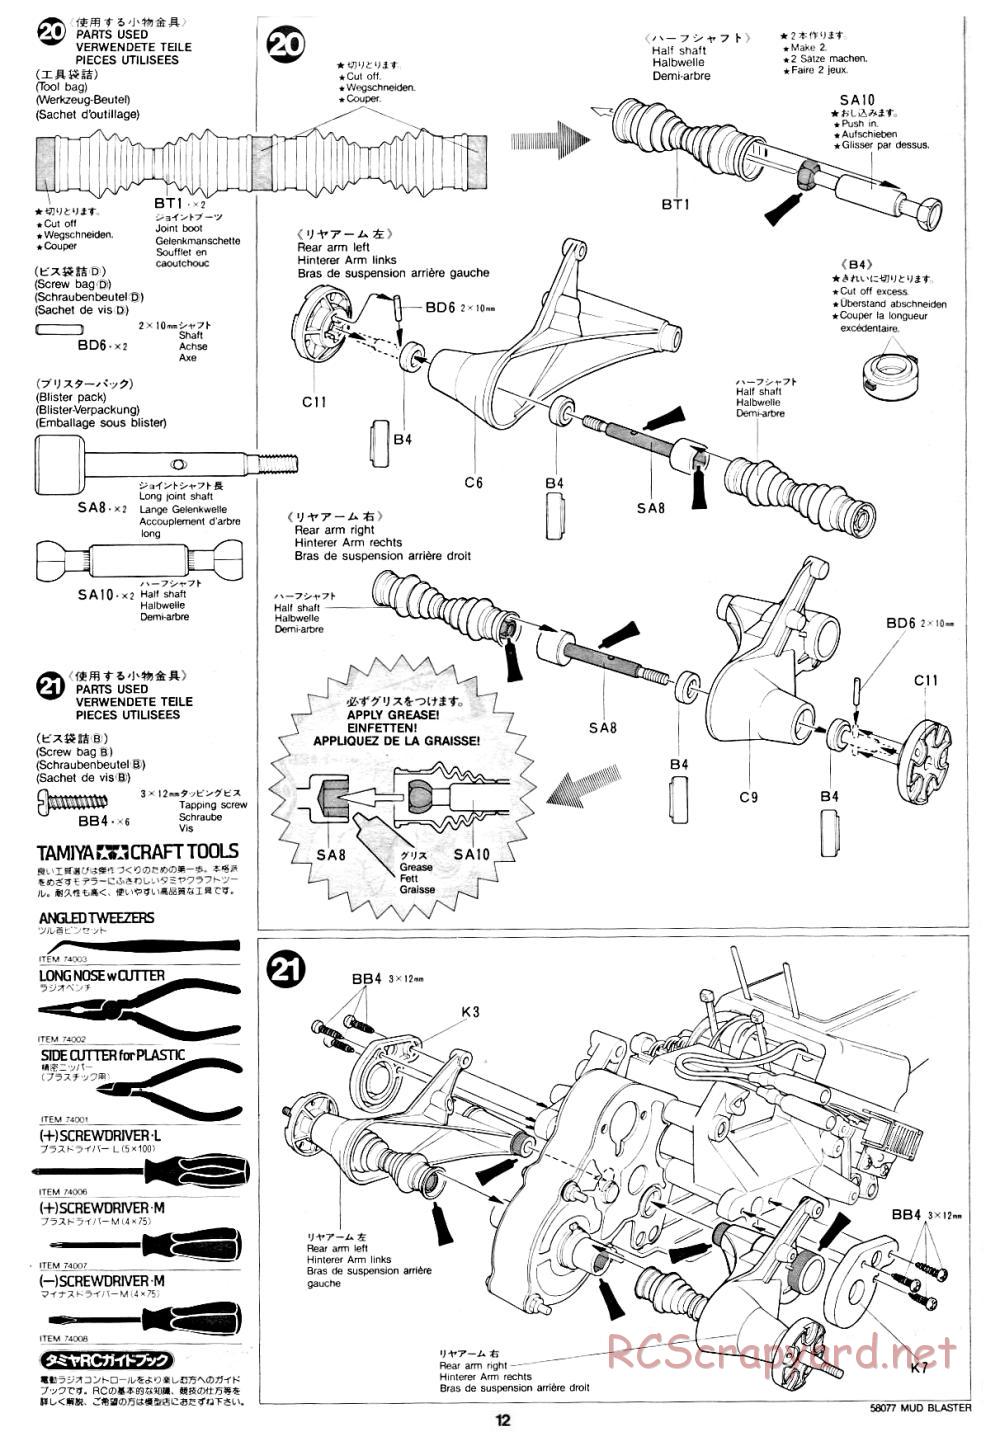 Tamiya - Mud Blaster - 58077 - Manual - Page 12